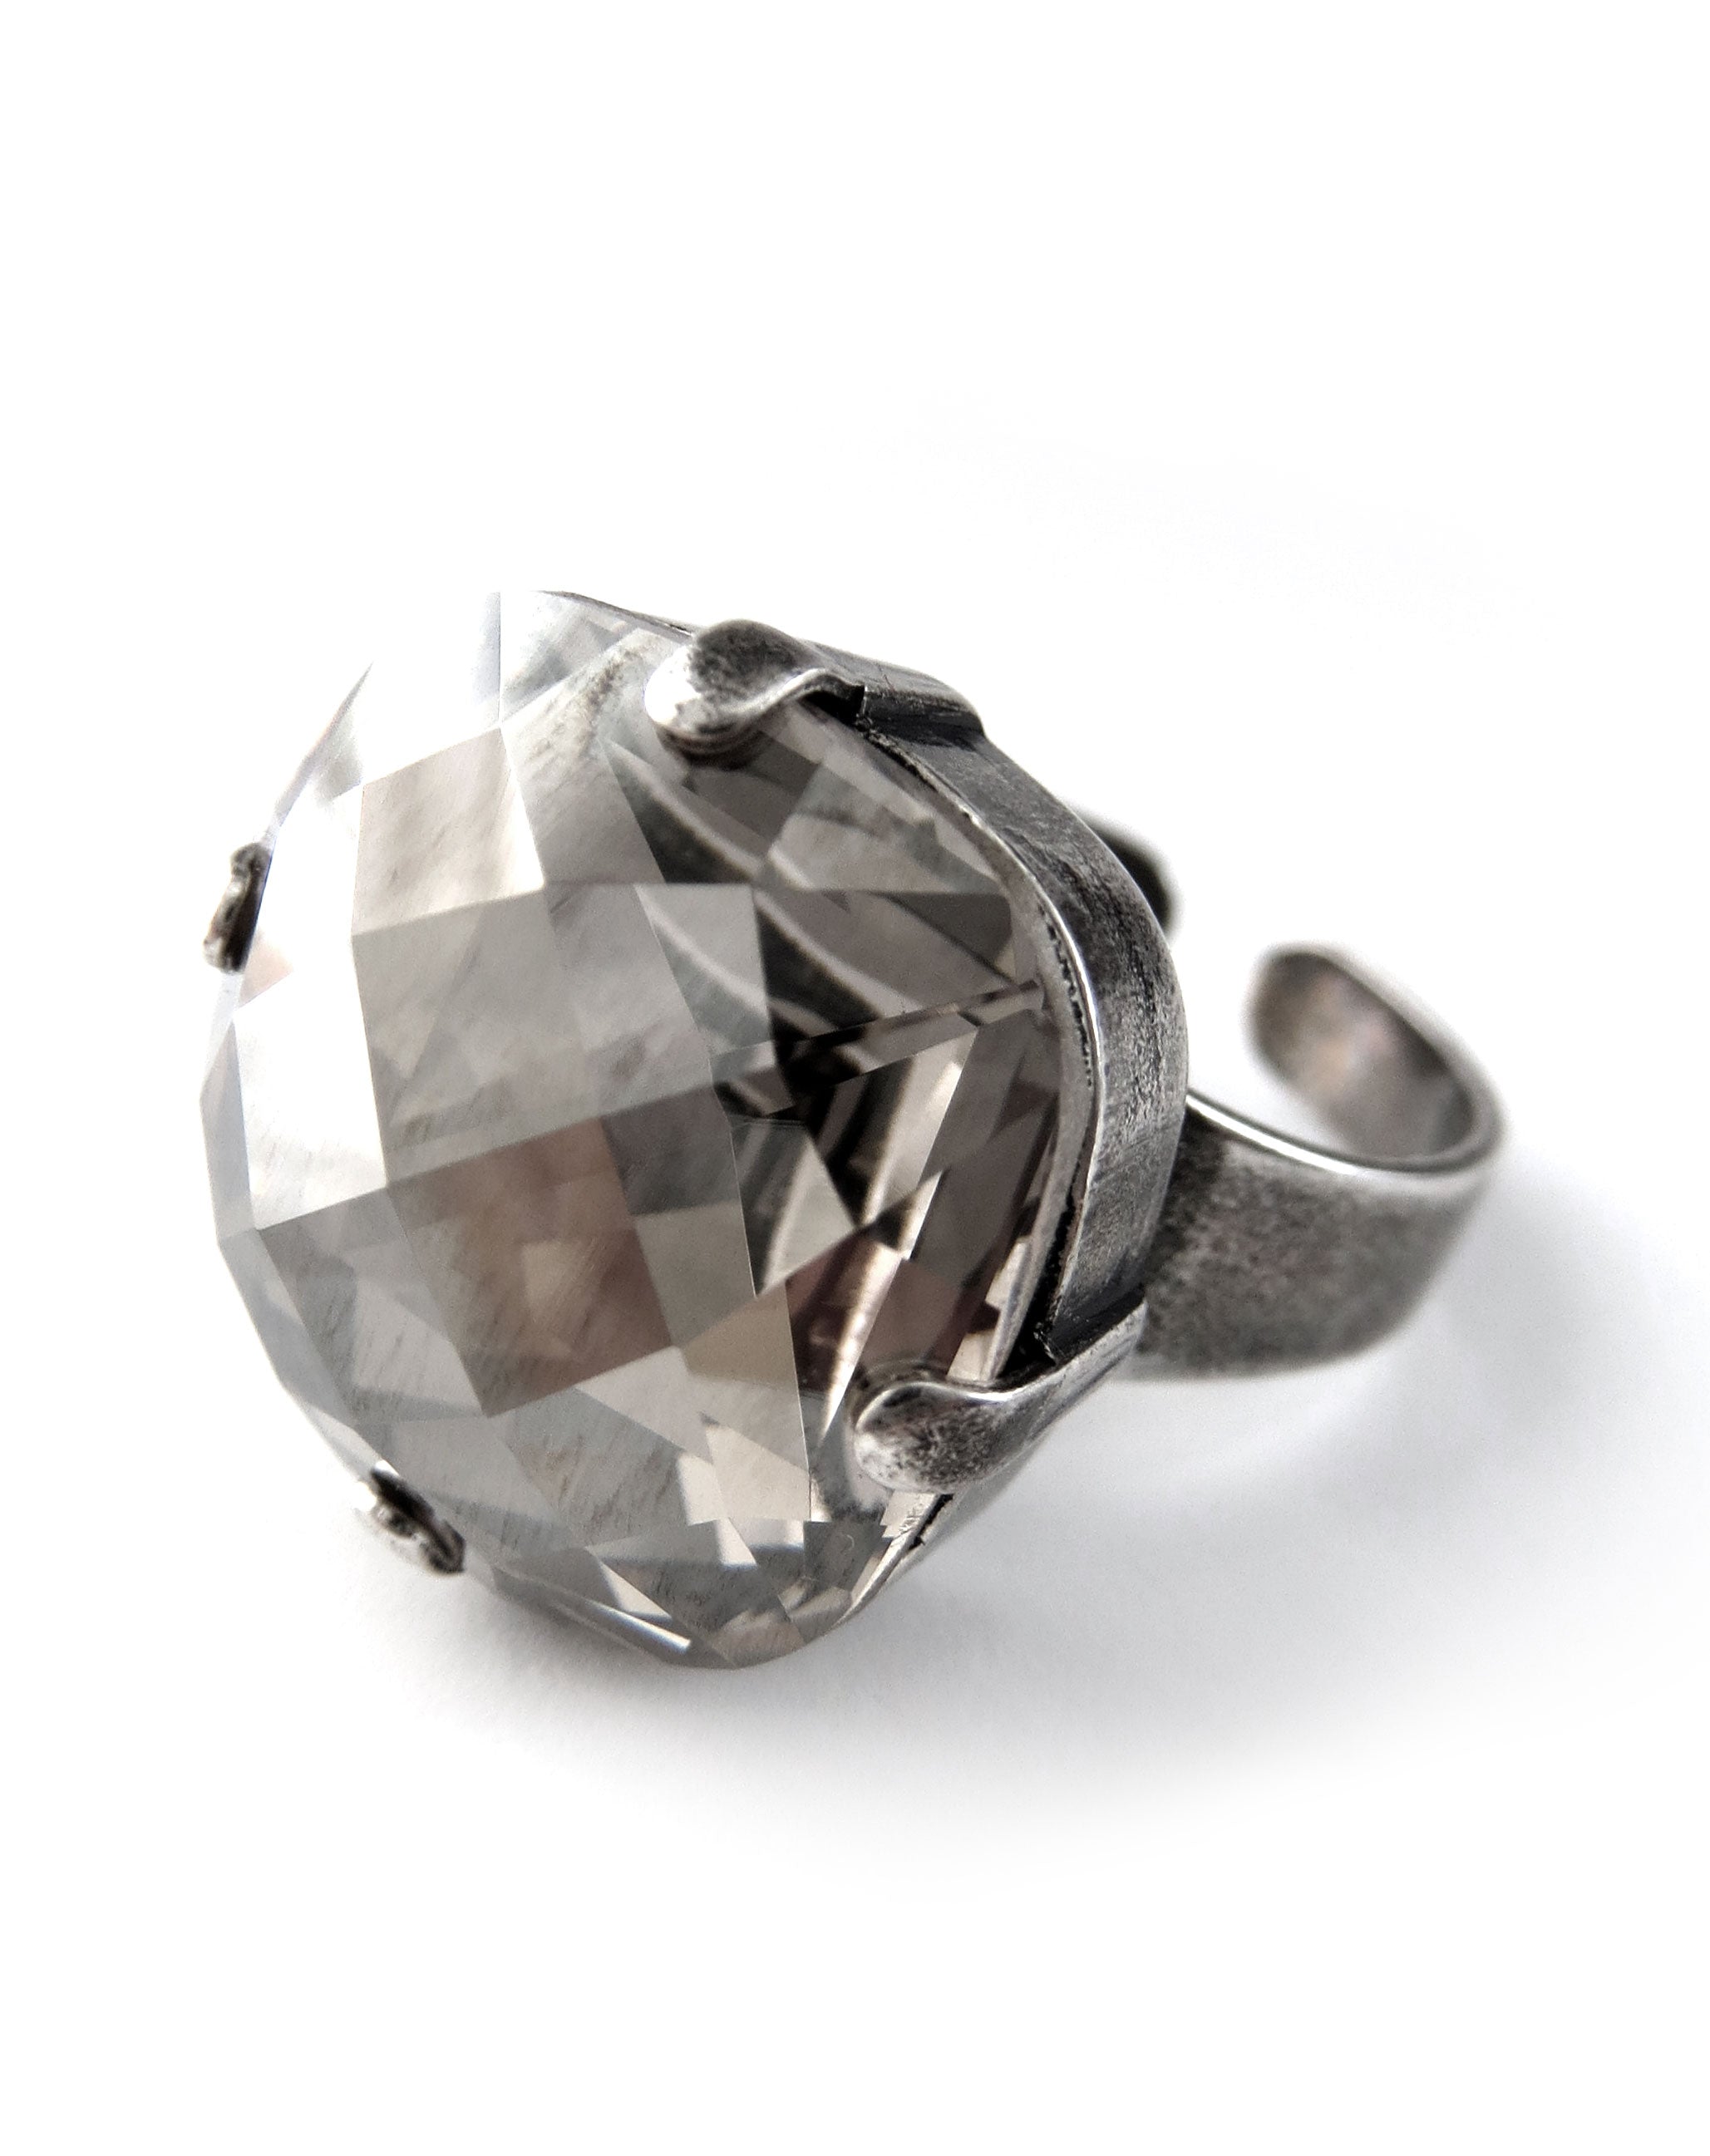 SILK SMOKE - Warm Silver Grey Crystal Ring - 2 Crystal Size Options